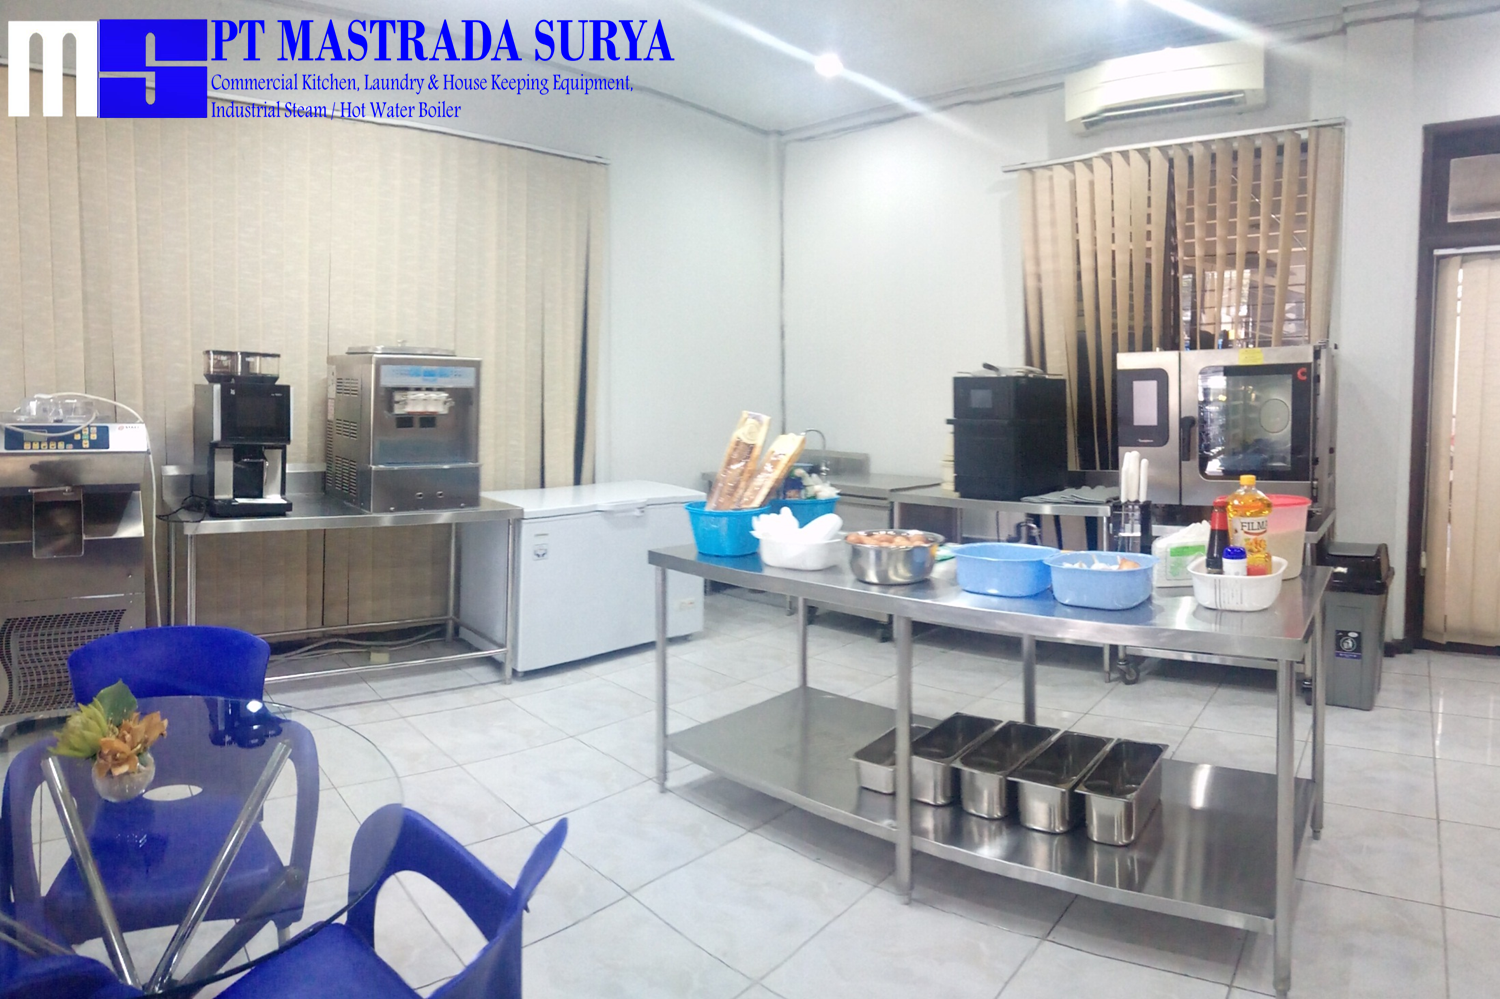 Daftar Produk Kitchen Equipment Dari PT Mastrada Surya Surabaya Di Surabaya